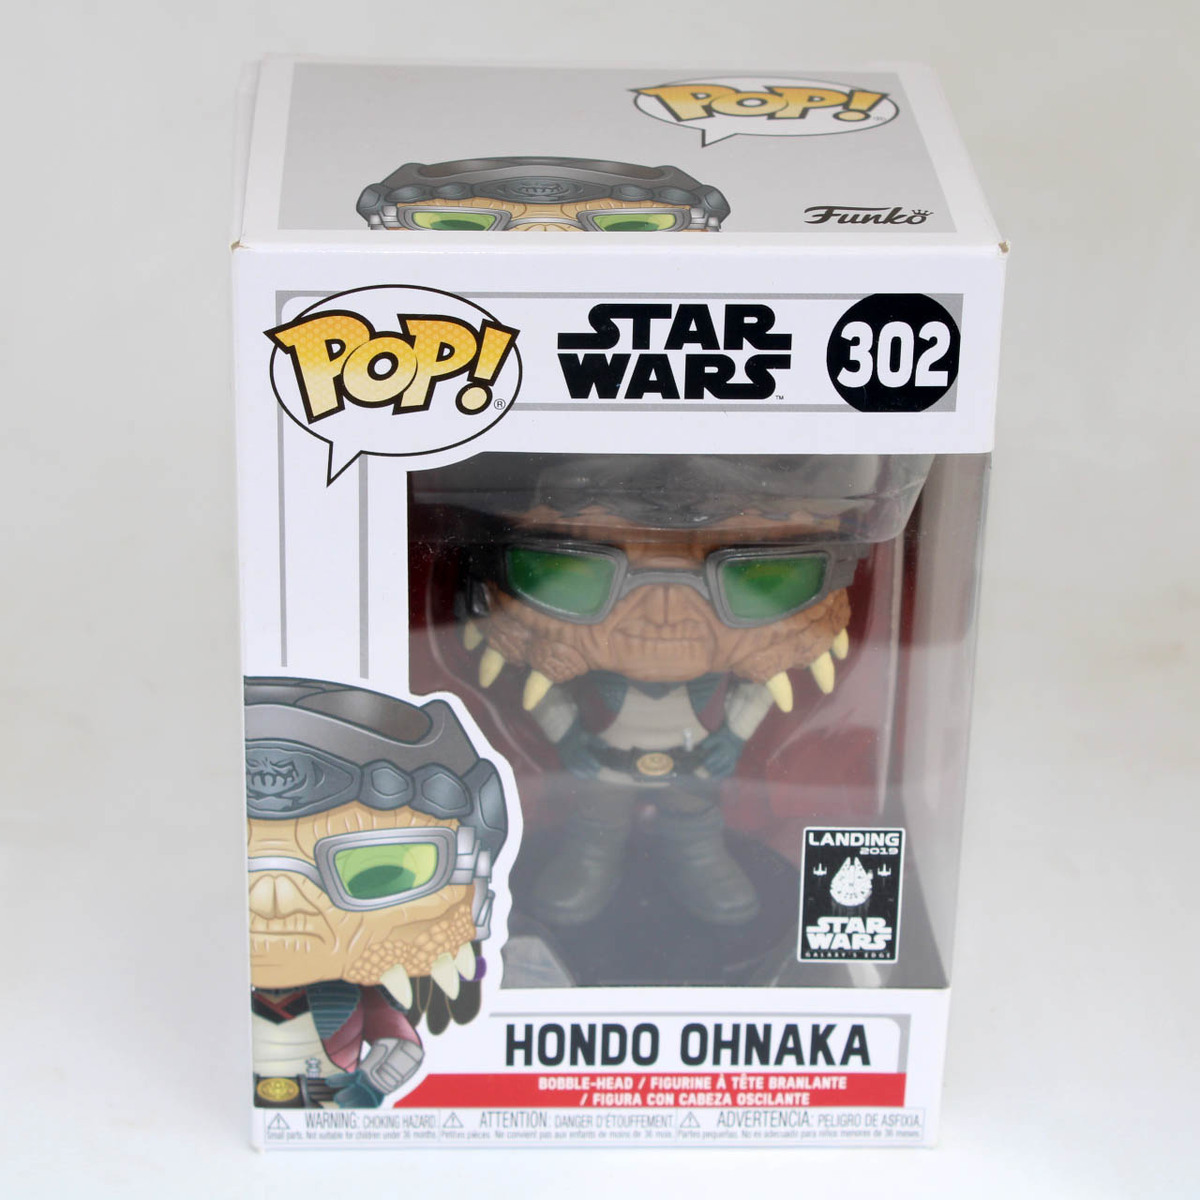 Protector Funko Pop Disney Star Wars Galaxy’s Edge Hondo Ohnaka #302 Figure